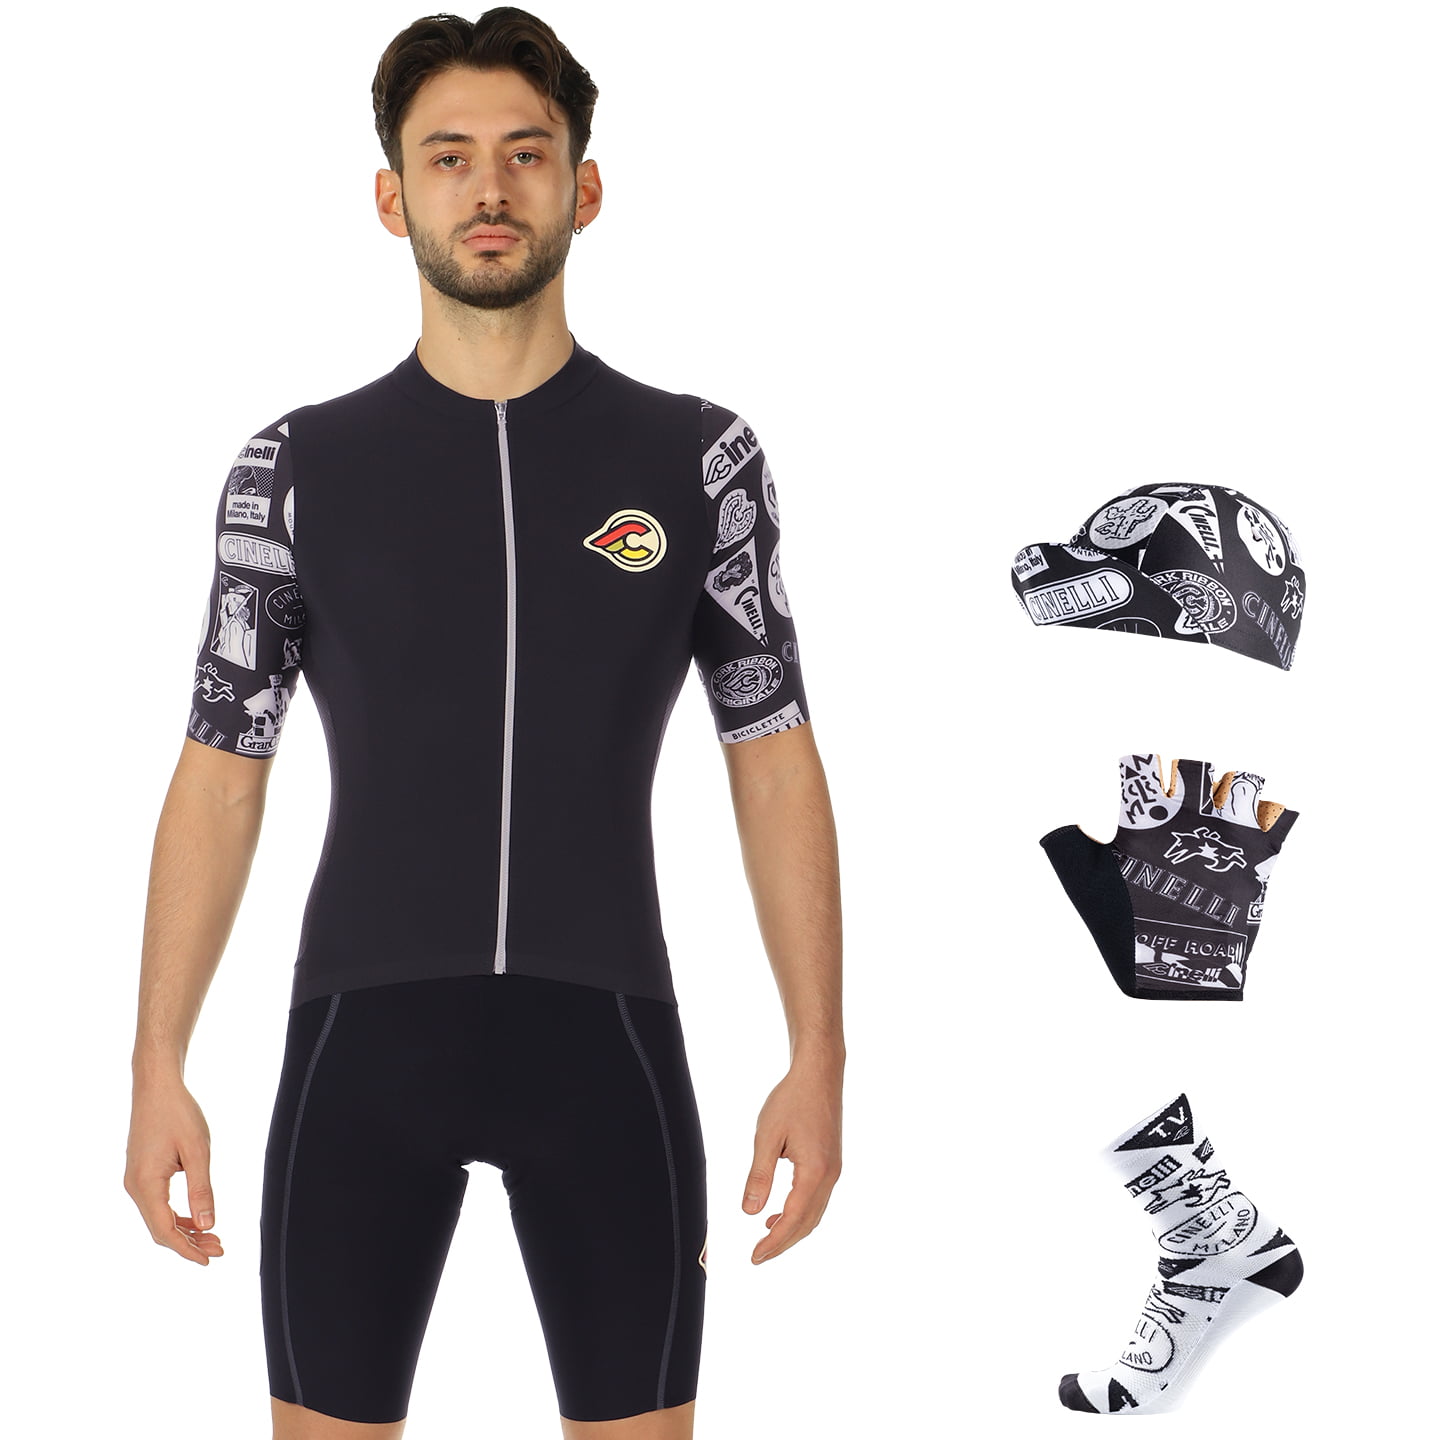 CINELLI Supercorsa Maxi-Set (5 pieces) Maxi Set (5 pieces), for men, Cycling clothing